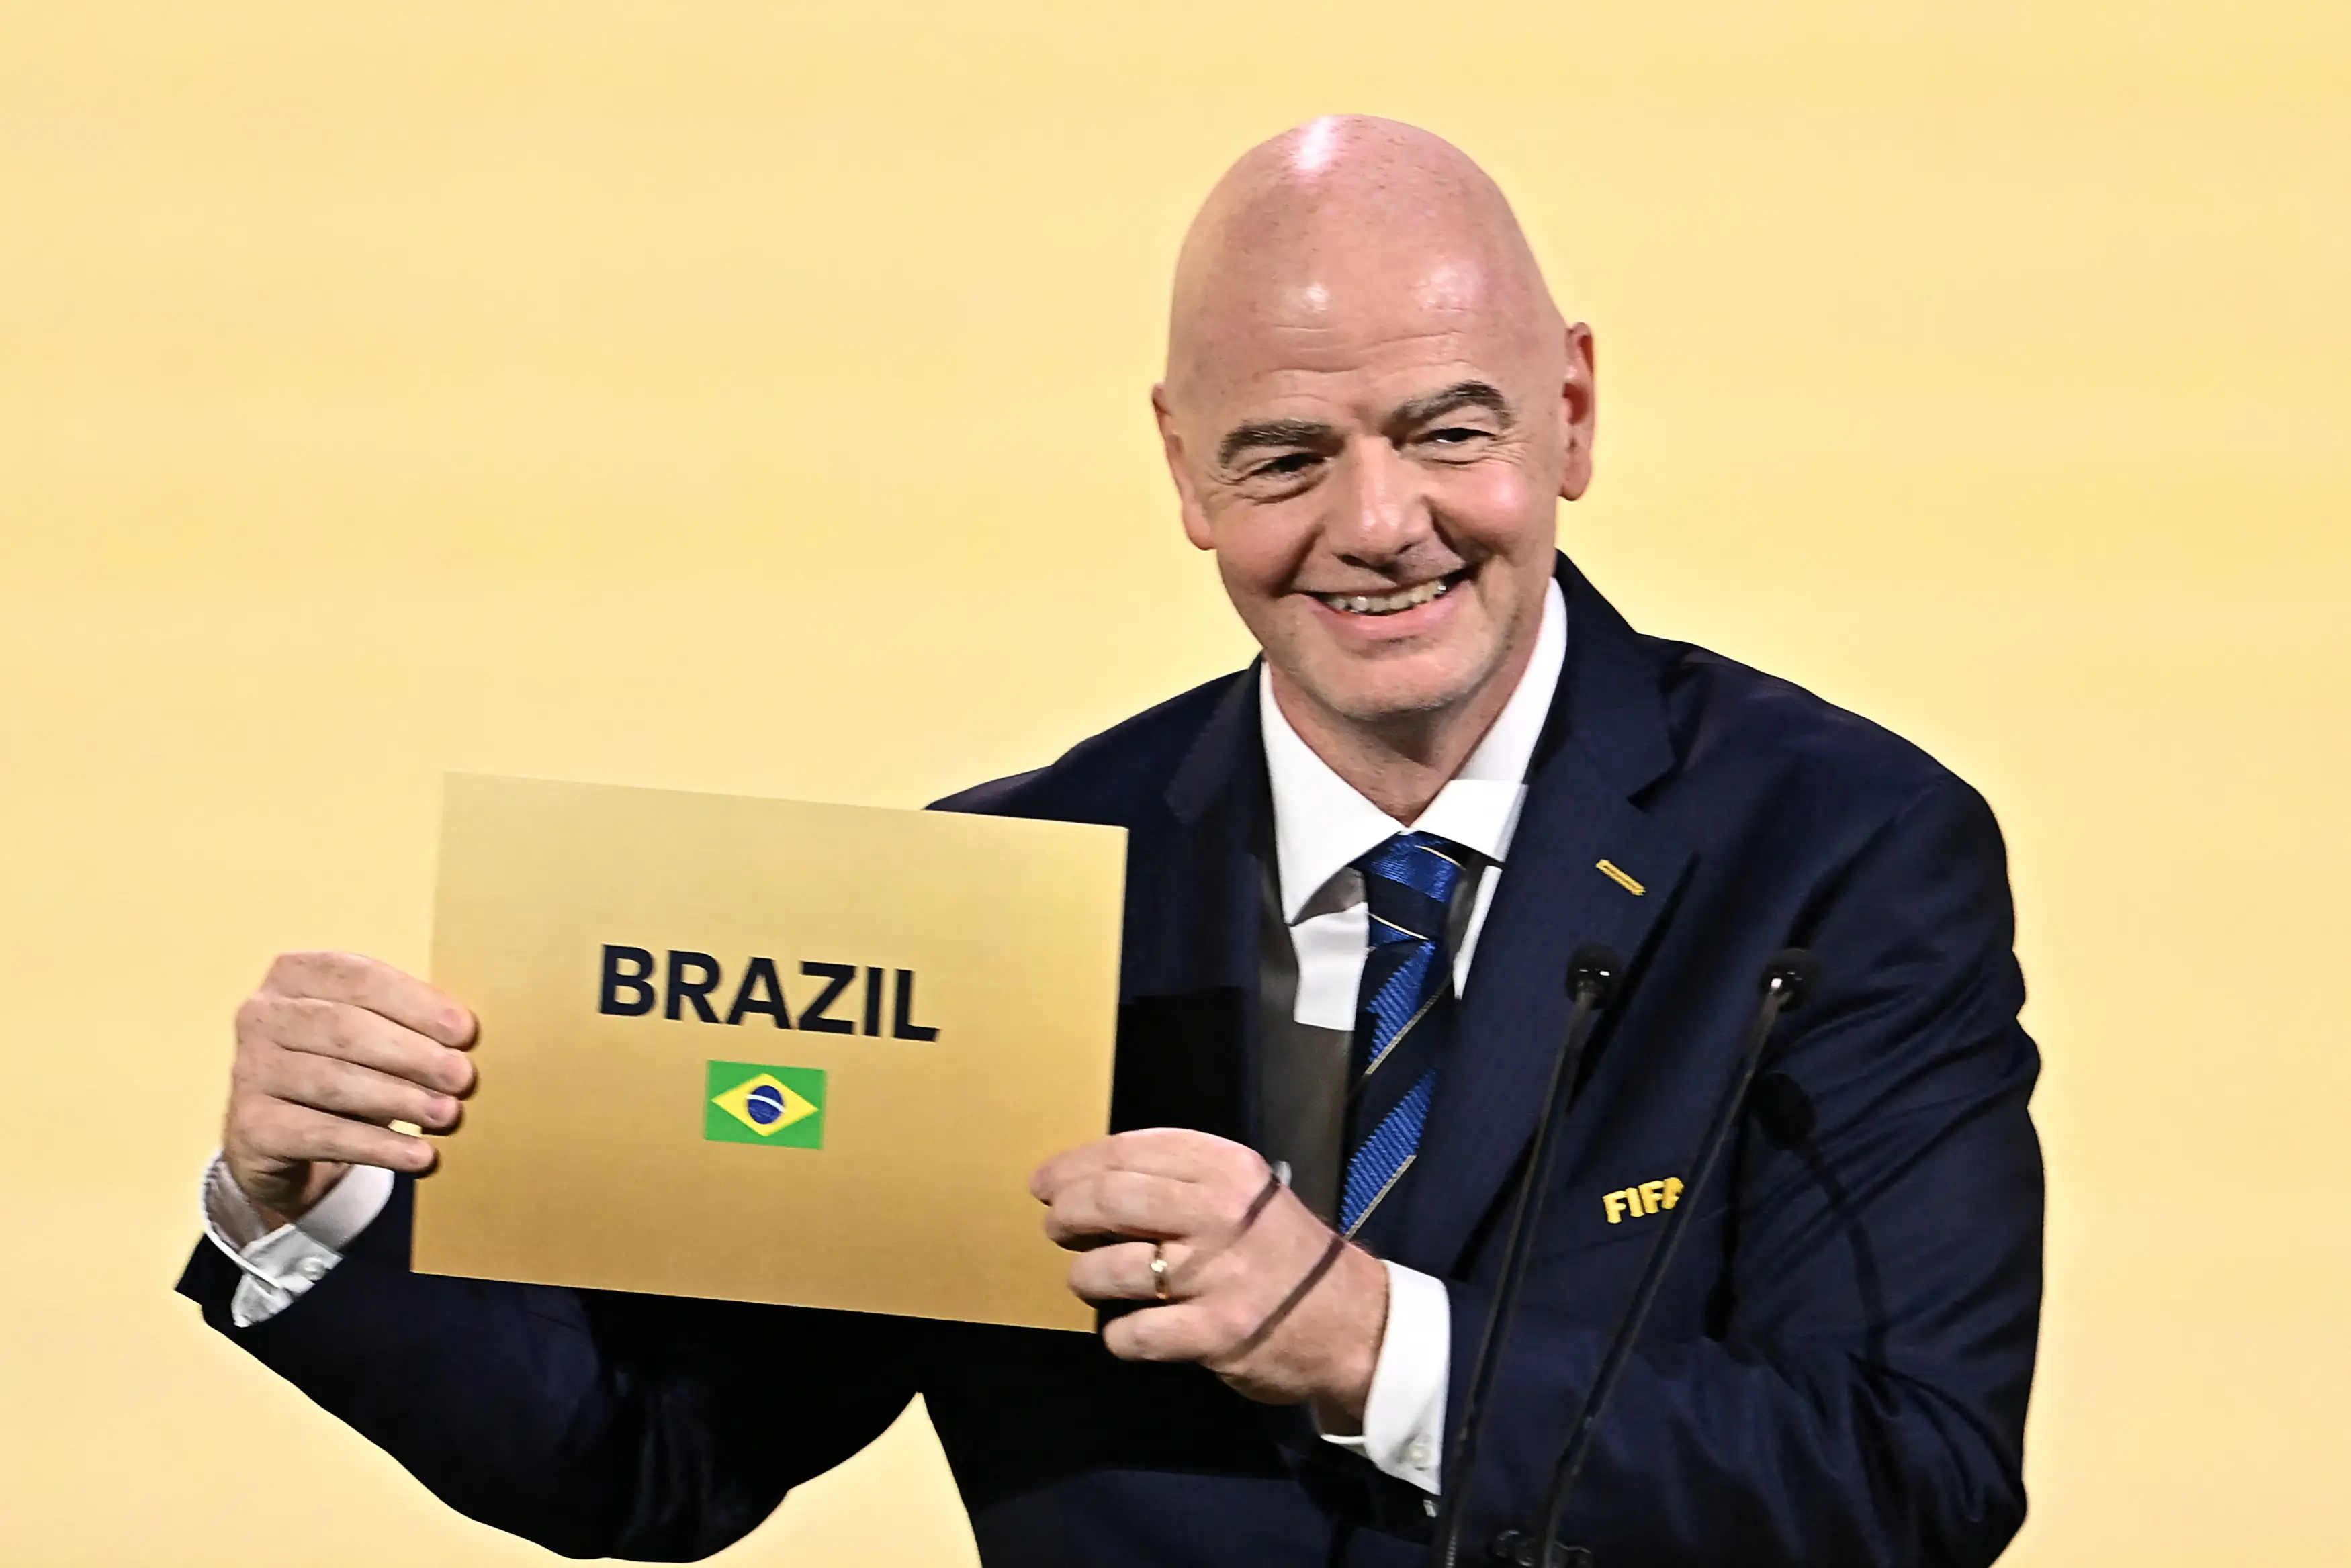 Imagem do presidente da FIFA Gianni Infantino anunciando o Brasil como país-sede da Copa do Mundo Feminina de 2027